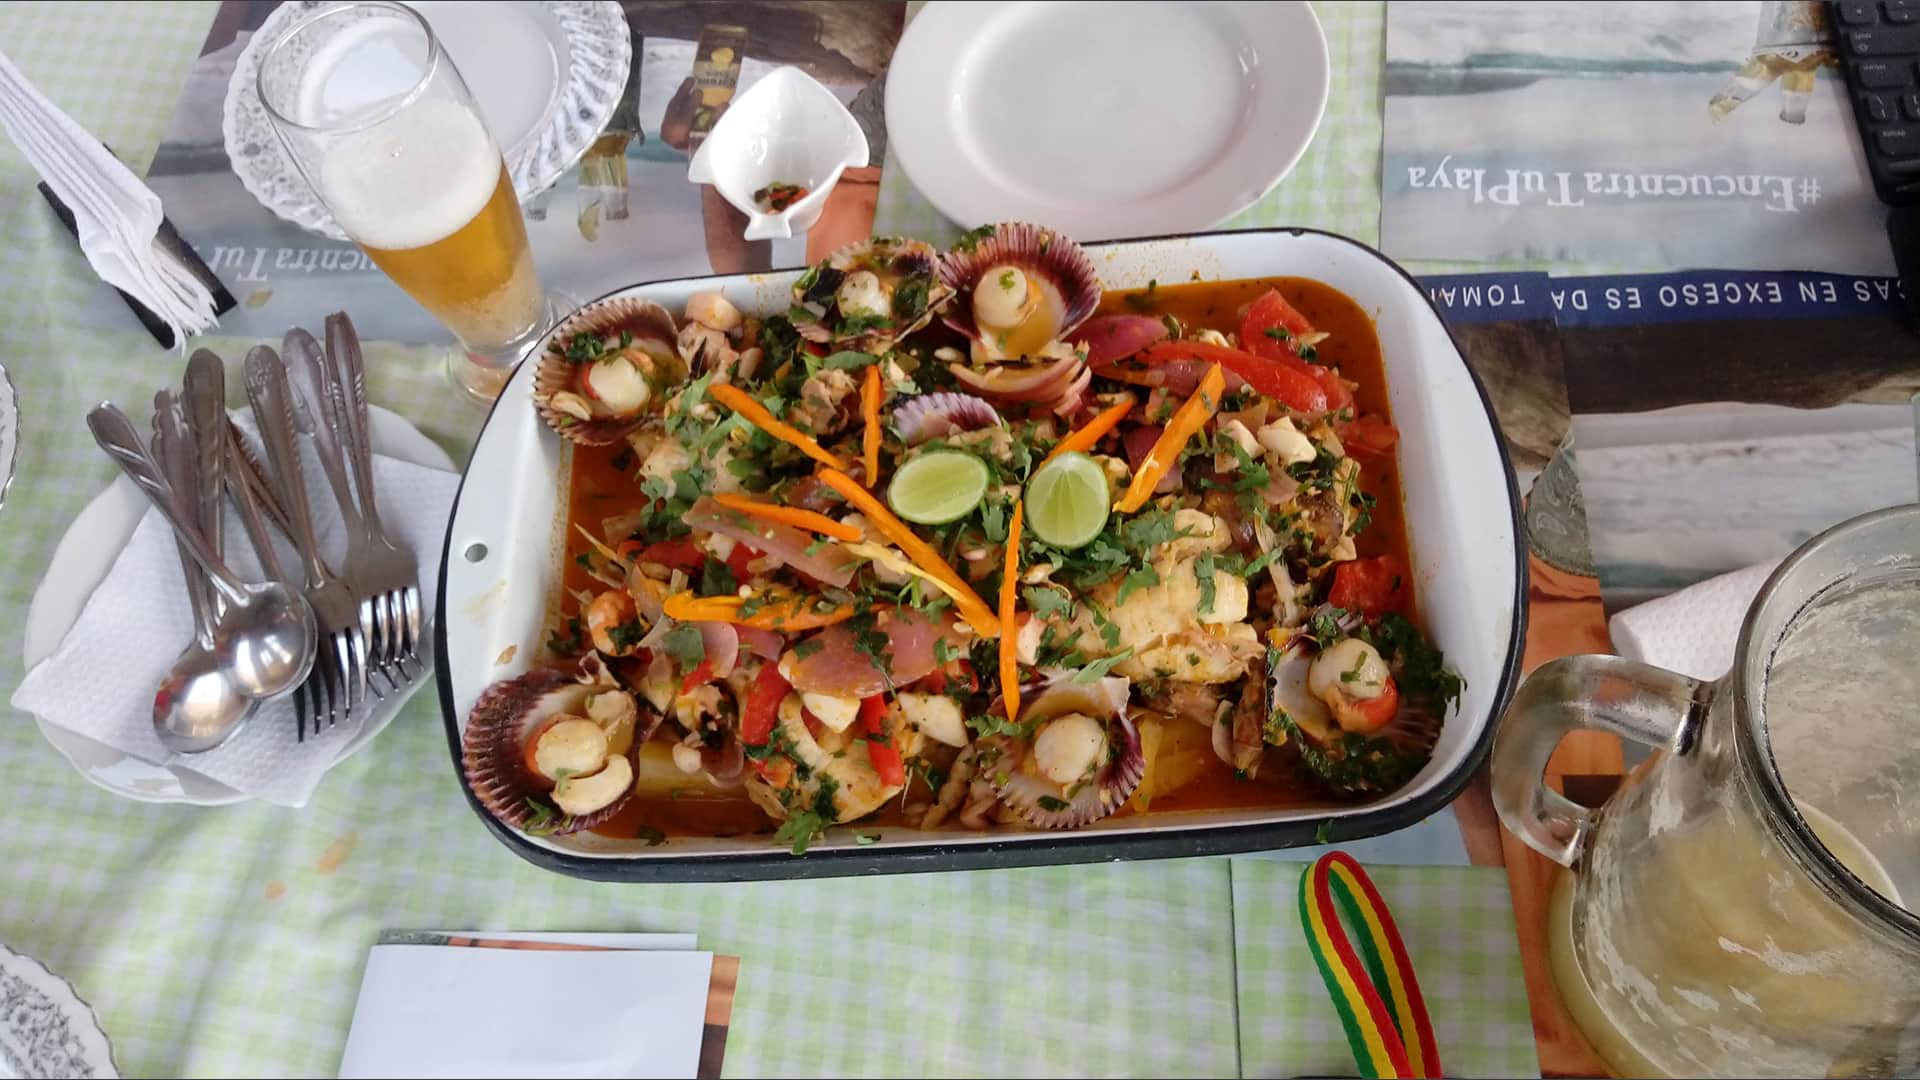 A big tray of ceviche. Peru's most popular dish | Responsible Travel Peru